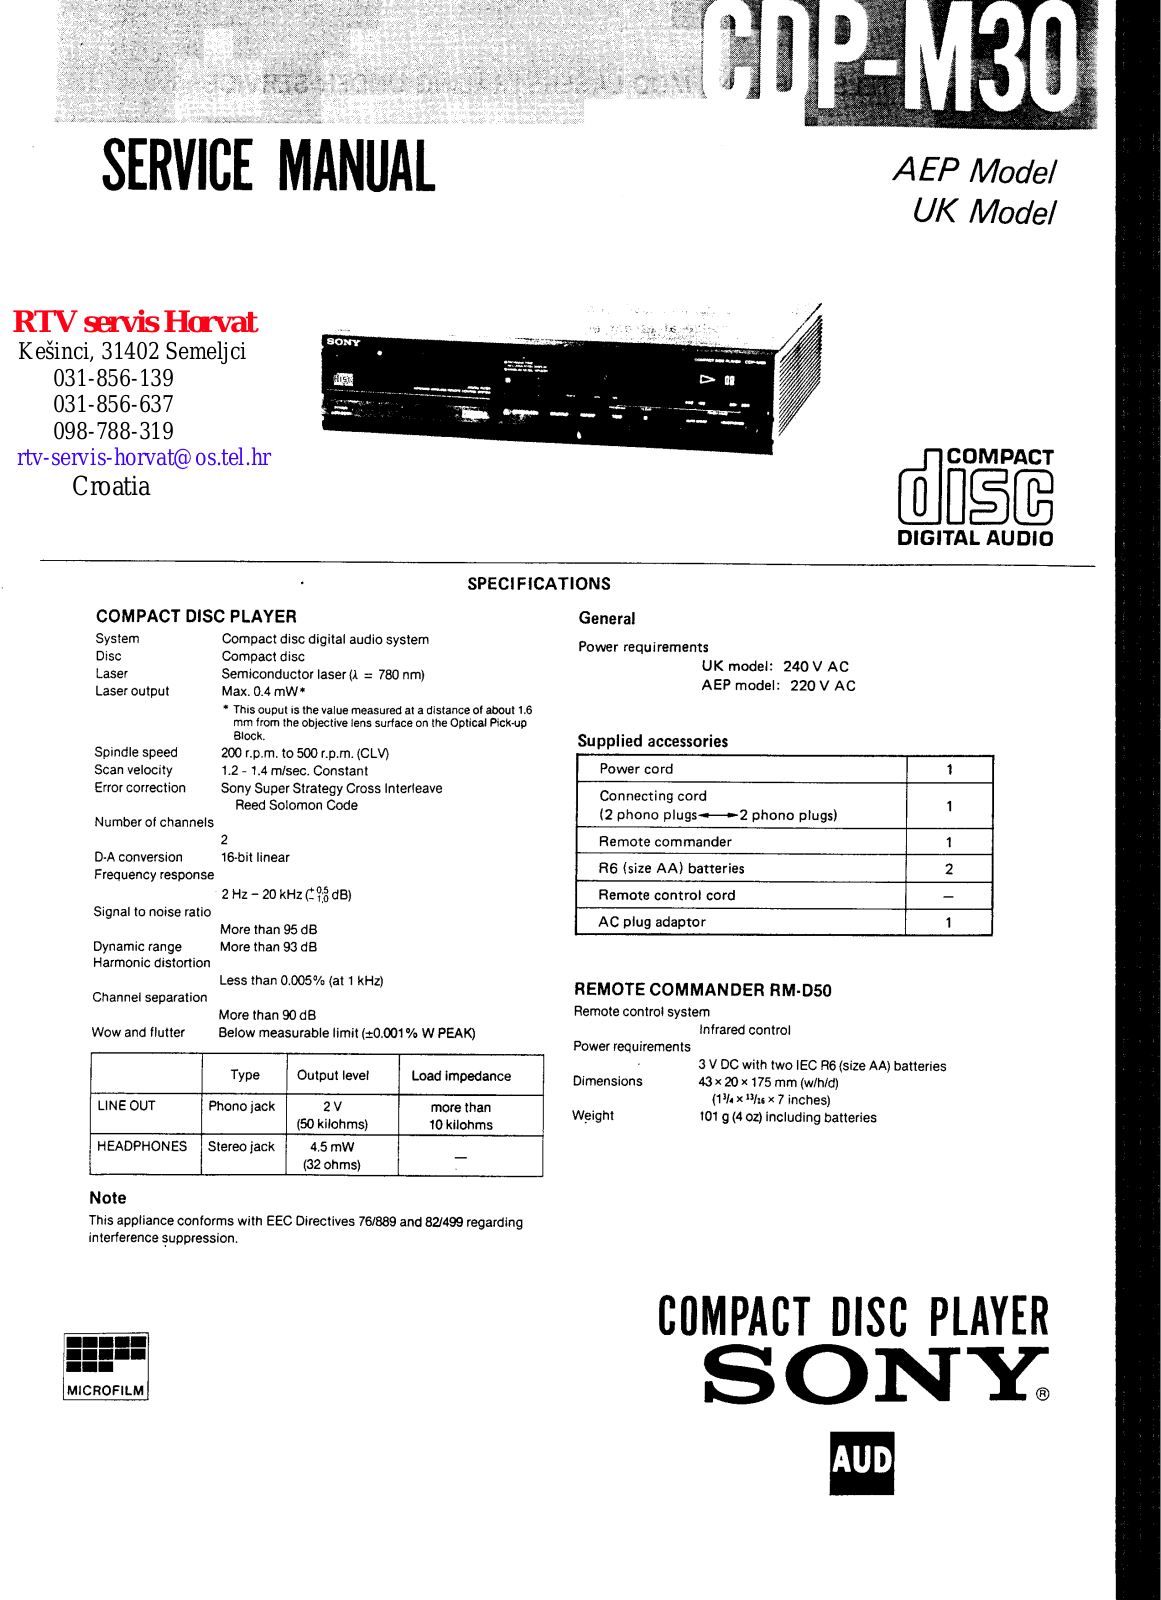 SONY CDP-M30 Service Manual